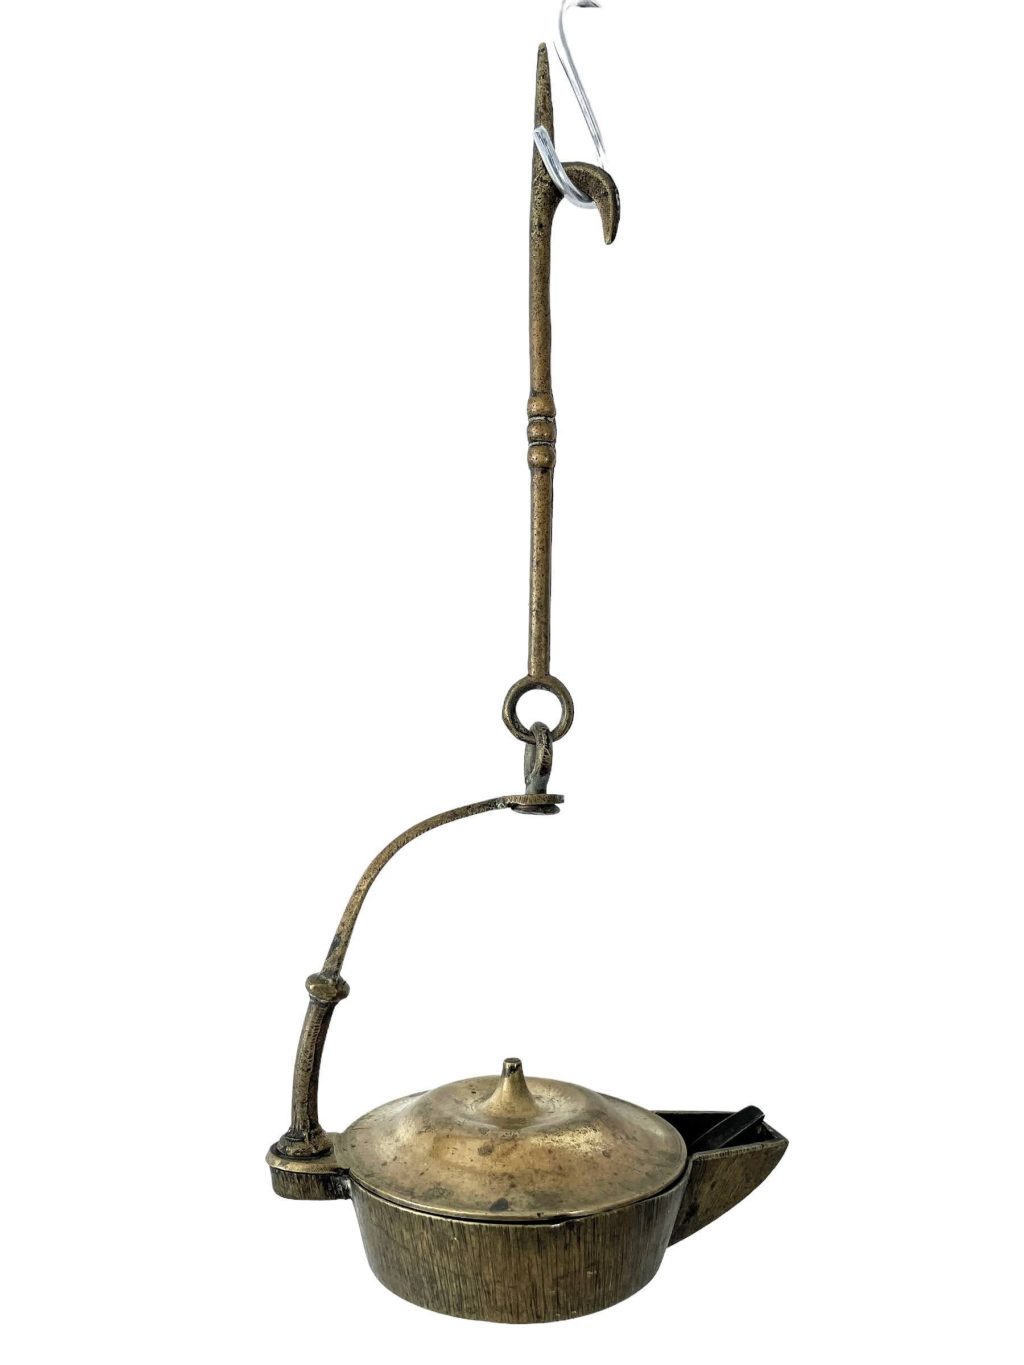 Antique French Brass Oil Lamp Burner Light Hanging Hook Decor Display Prop Lighting Hallway Cloakroom Kitchen c1910’s